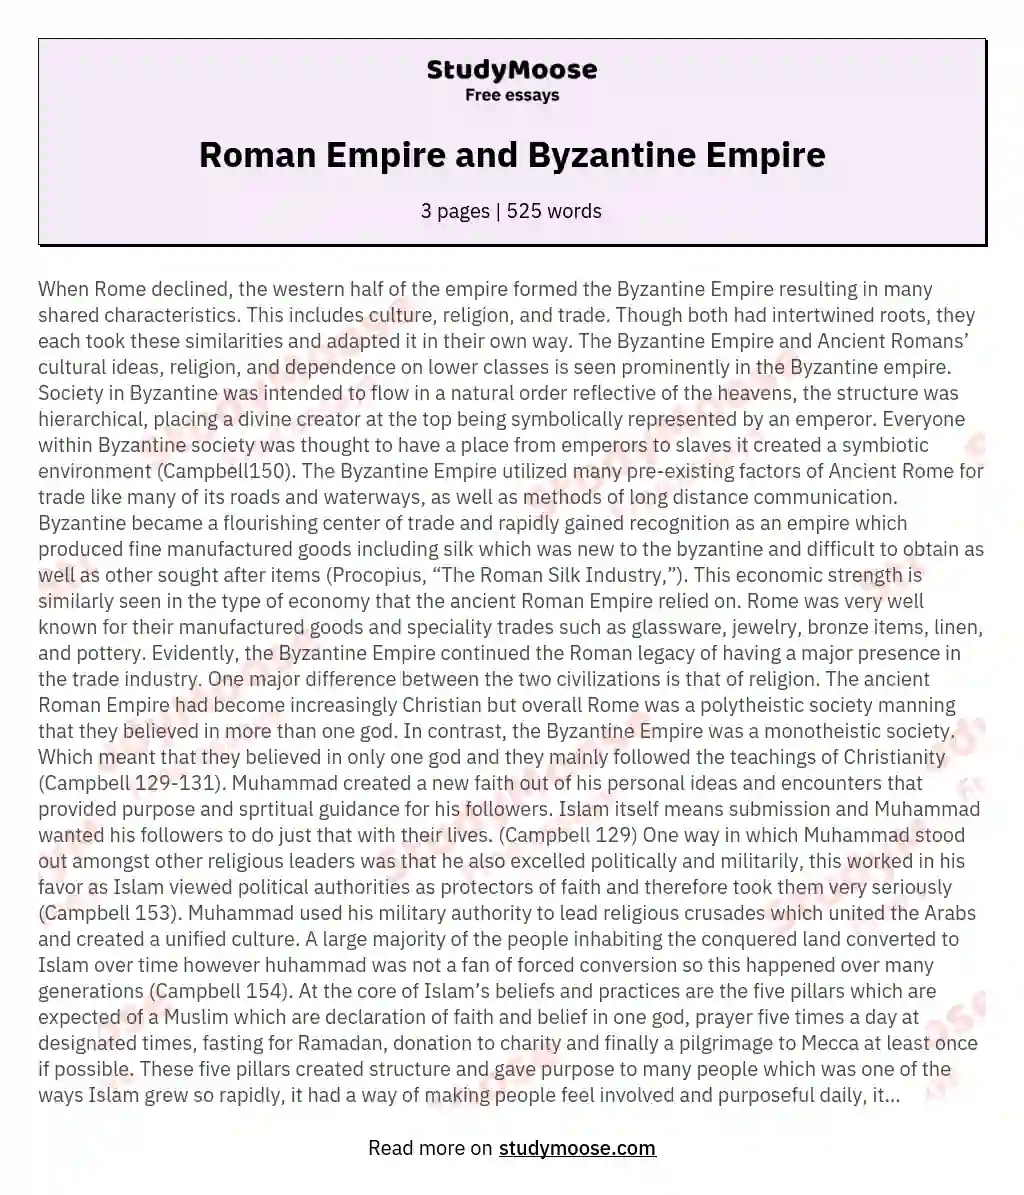 Roman Empire and Byzantine Empire